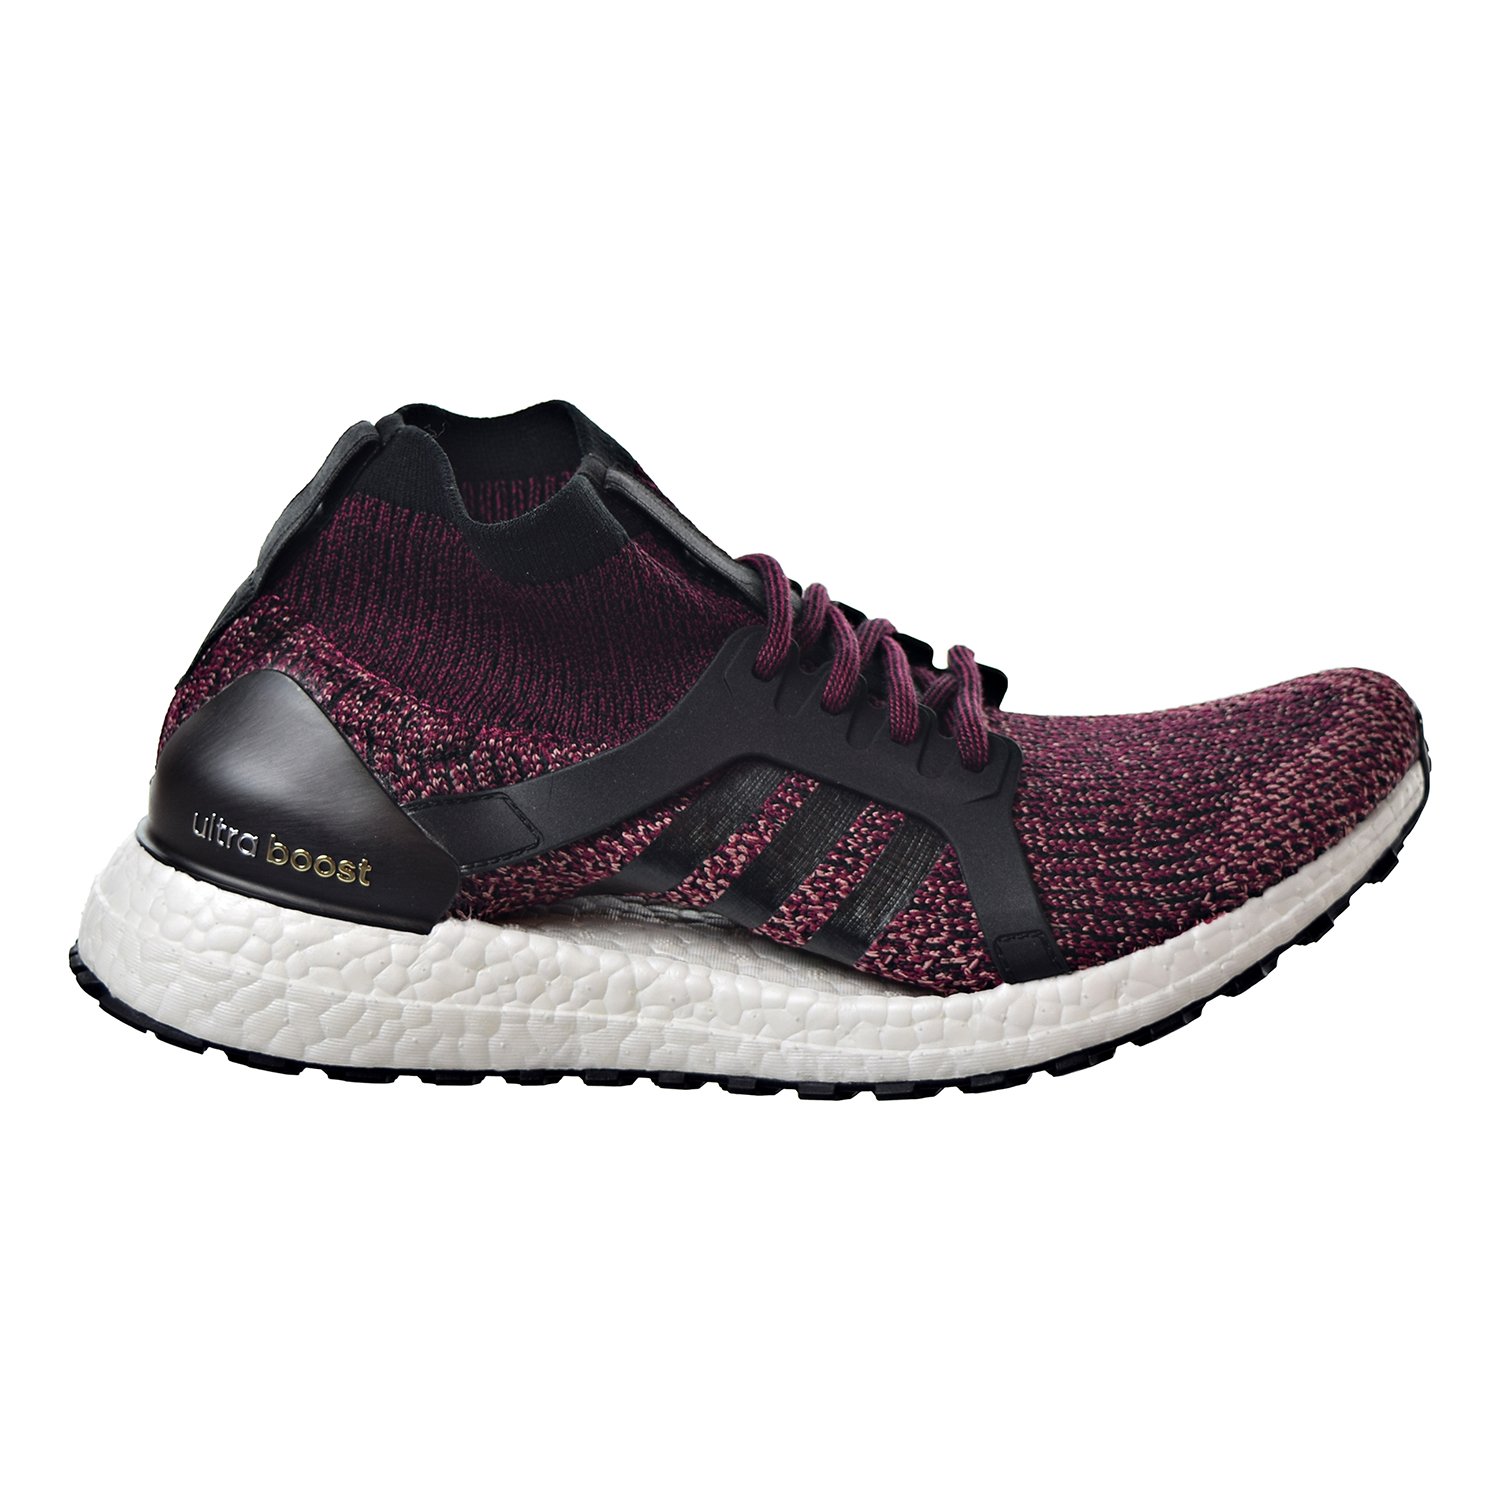 adidas Womens Ultraboost x All Terrain BY1678 - Size 9W Burgundy/Black